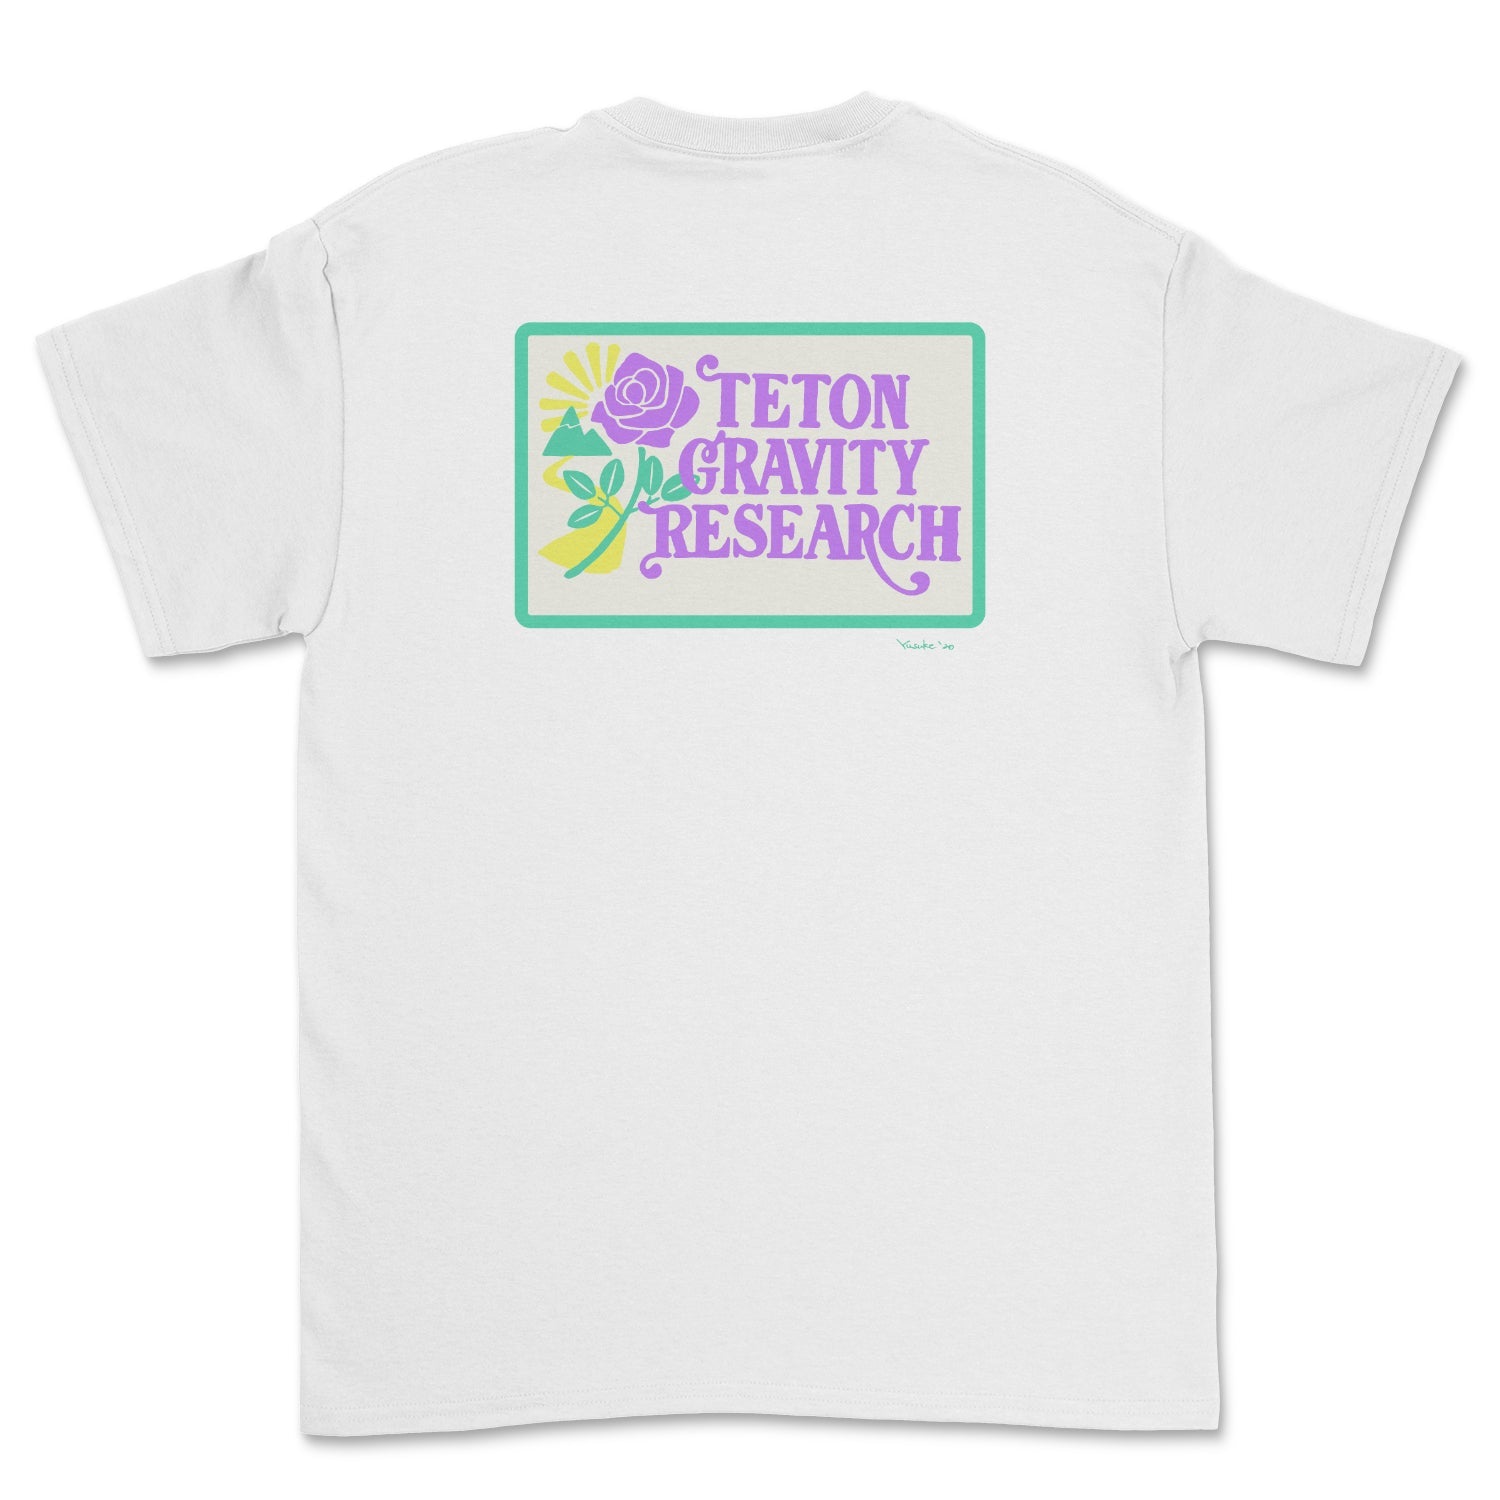 "Have A TGR Day" Short Sleeve Tee by Yusuke Komori - Teton Gravity Research